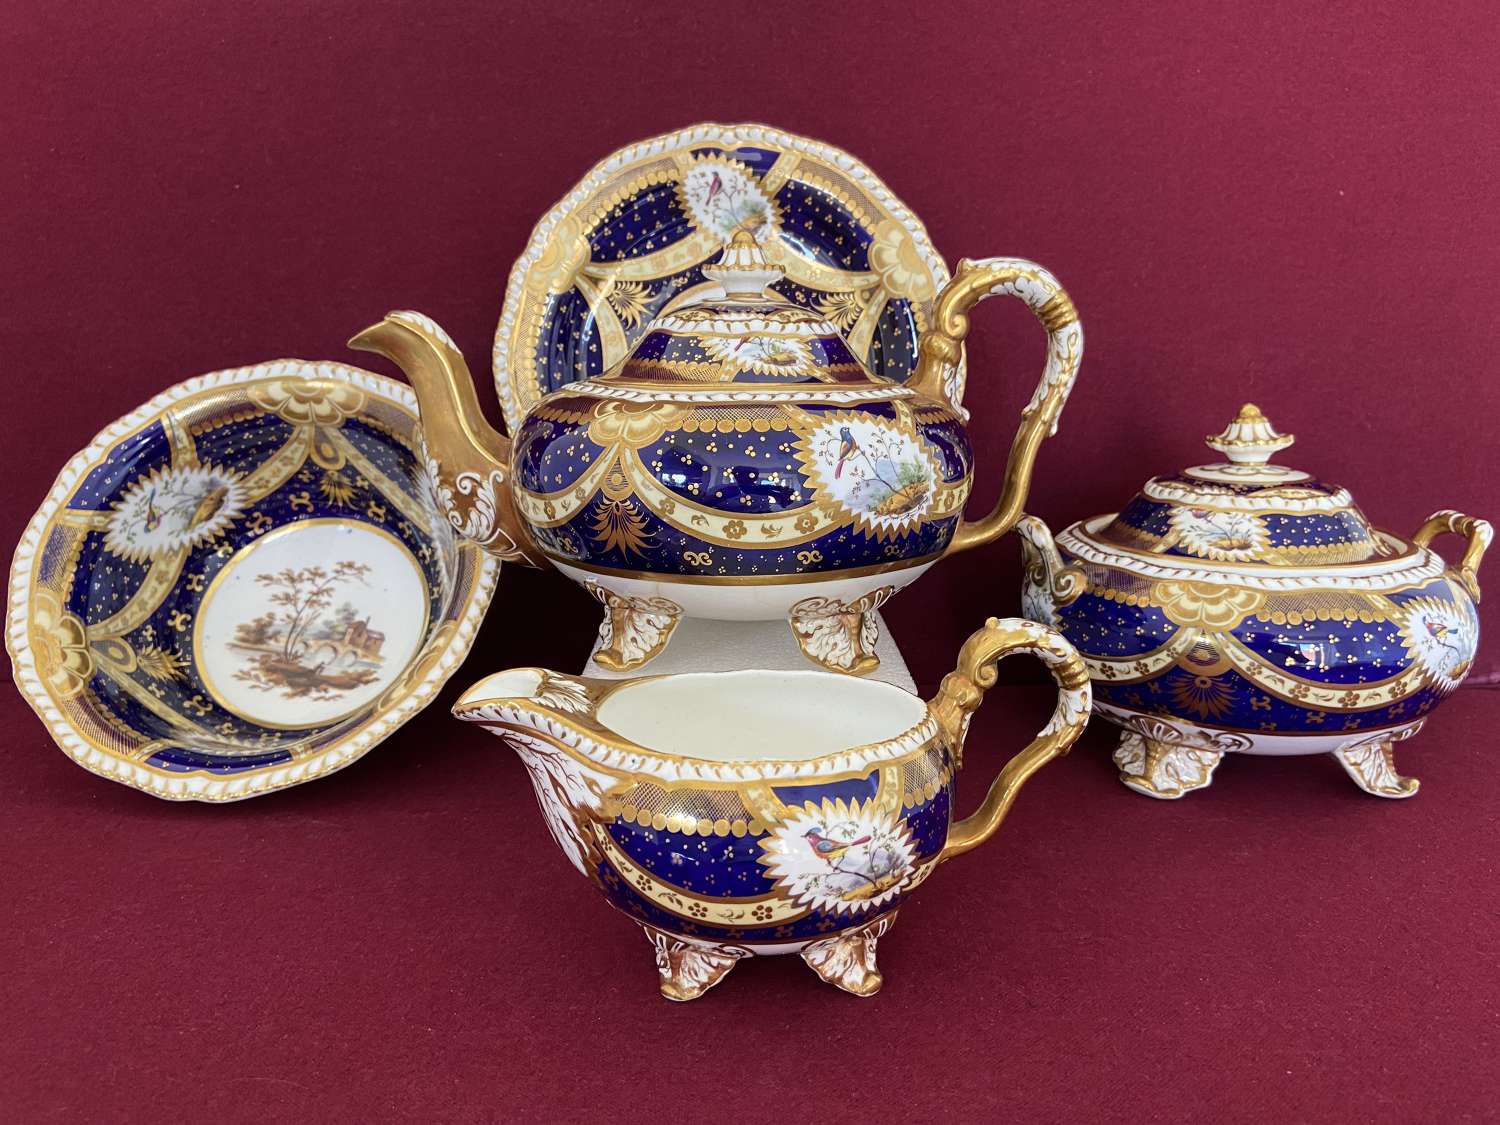 Representative pieces from a H &R Daniel tea service c.1826